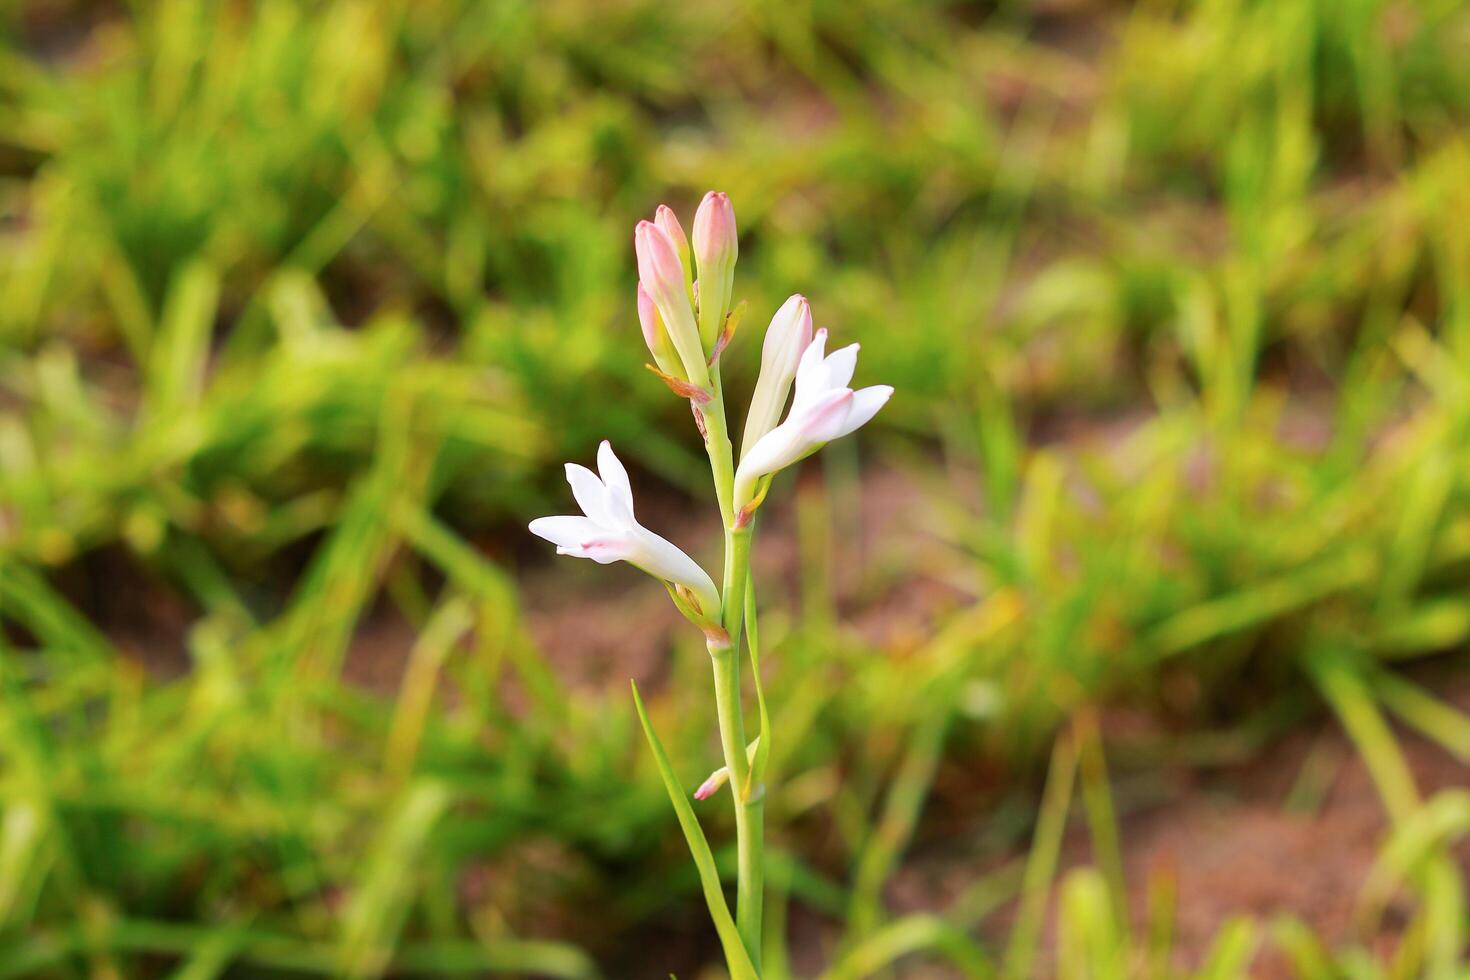 blanc freesia fleur sur vert herbe arrière-plan, fermer de photo